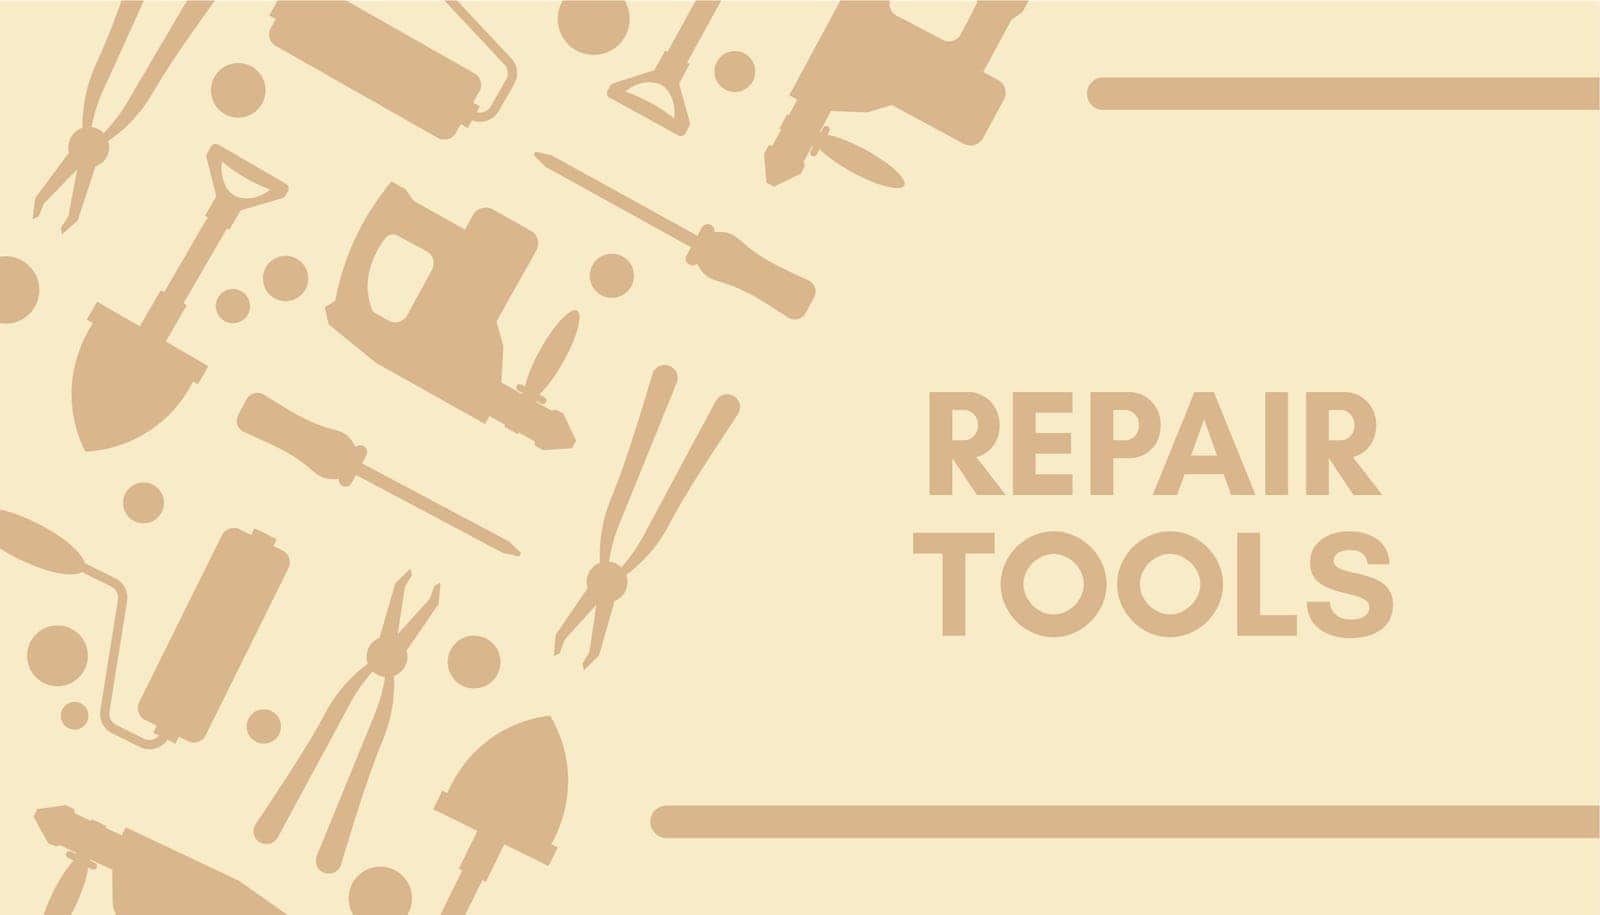 Repair tools, instrument for fixing maintenance by Sonulkaster